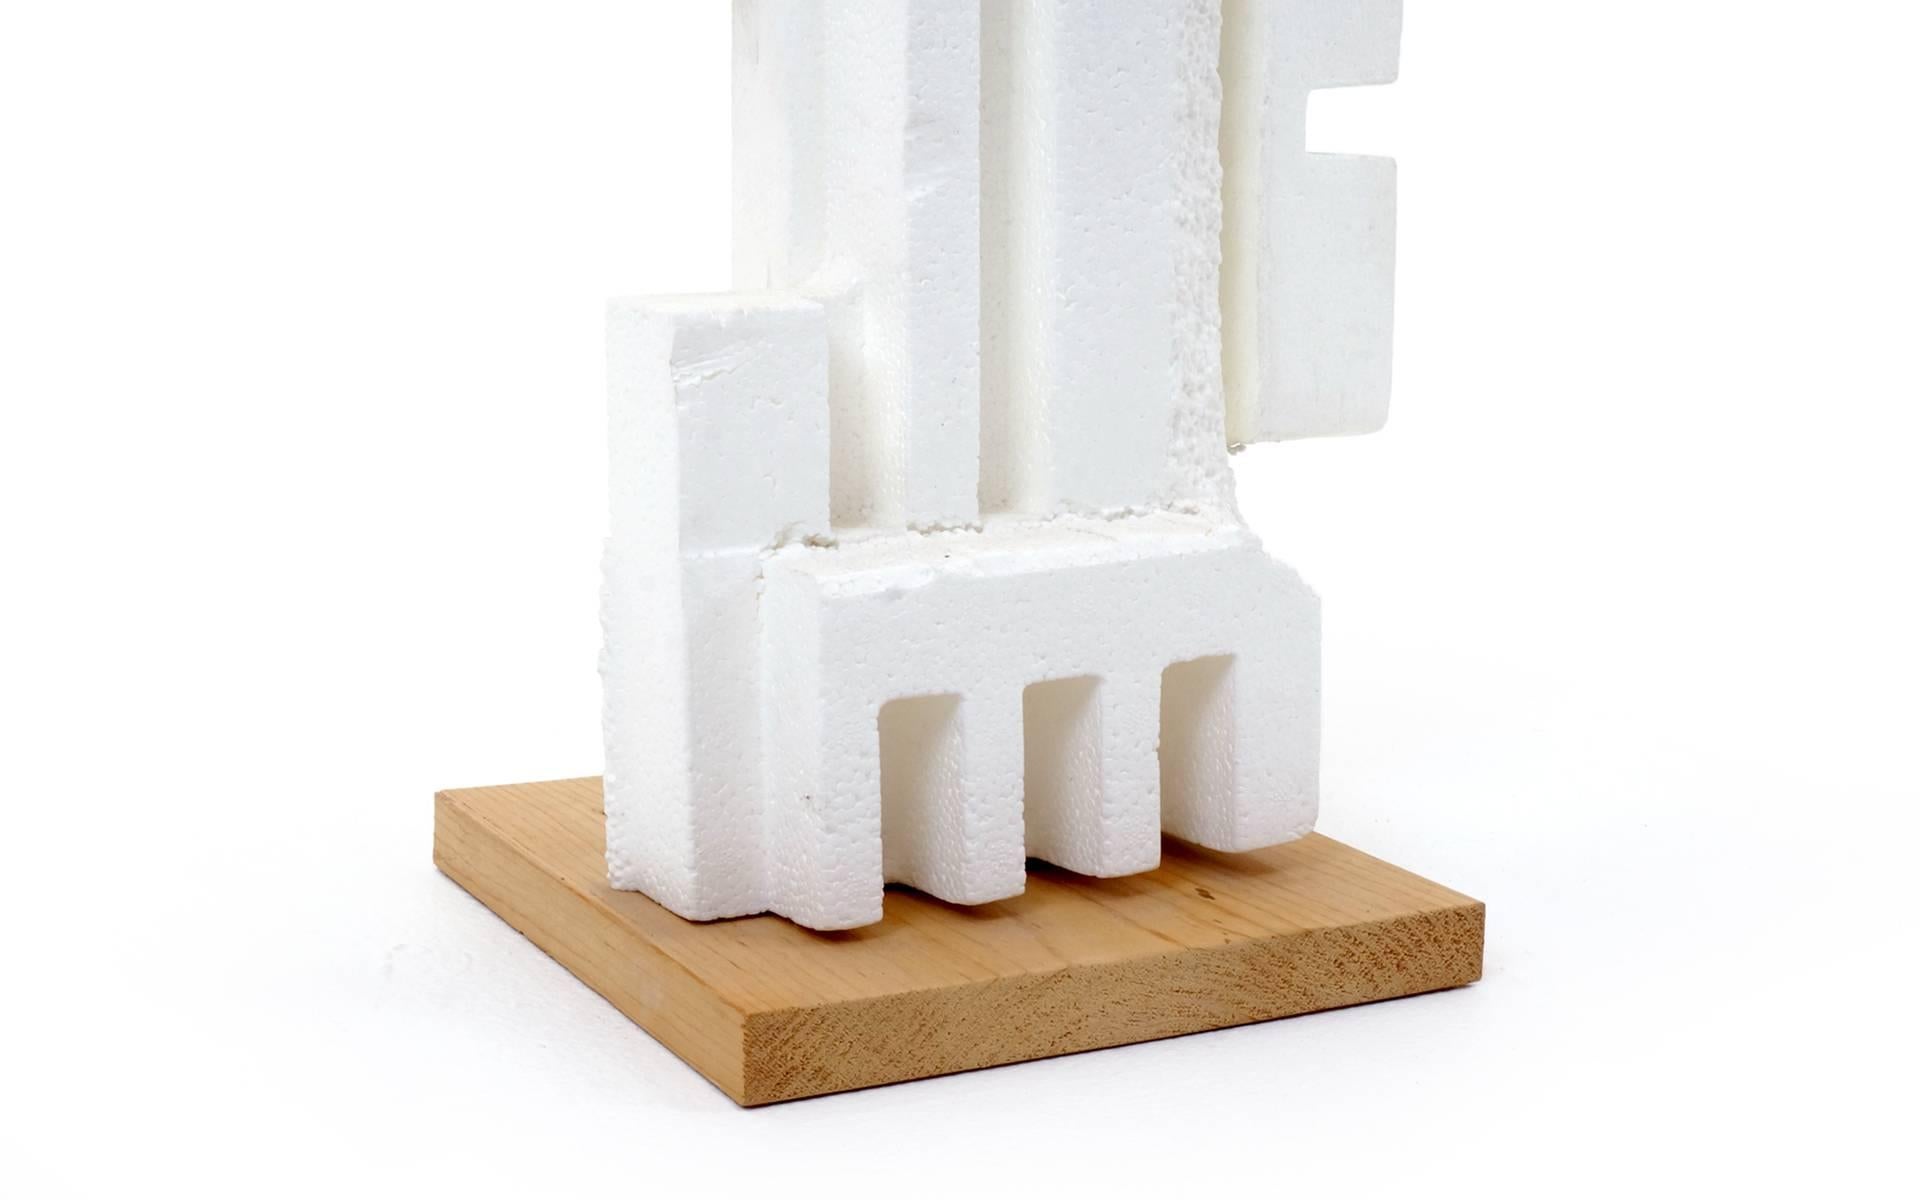 Irving Harper Sculpture of Styrofoam from His Paper Sculpture Series 1